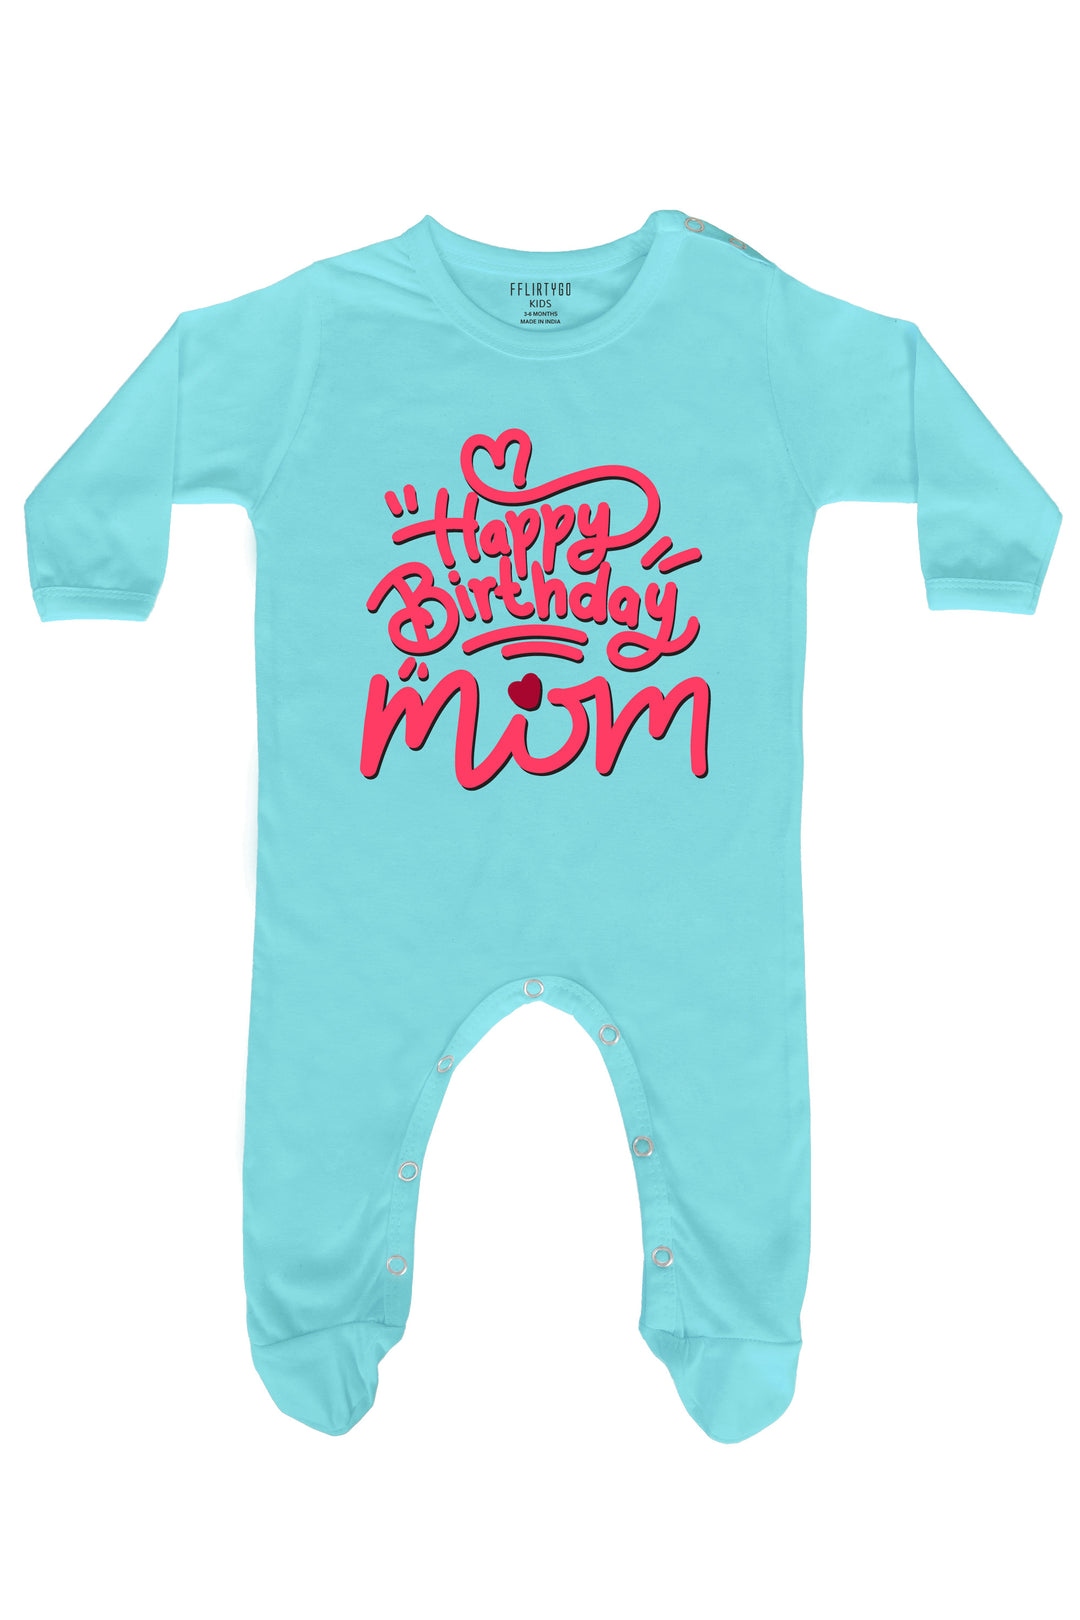 Happy Birthday Mom Baby Romper | Onesies